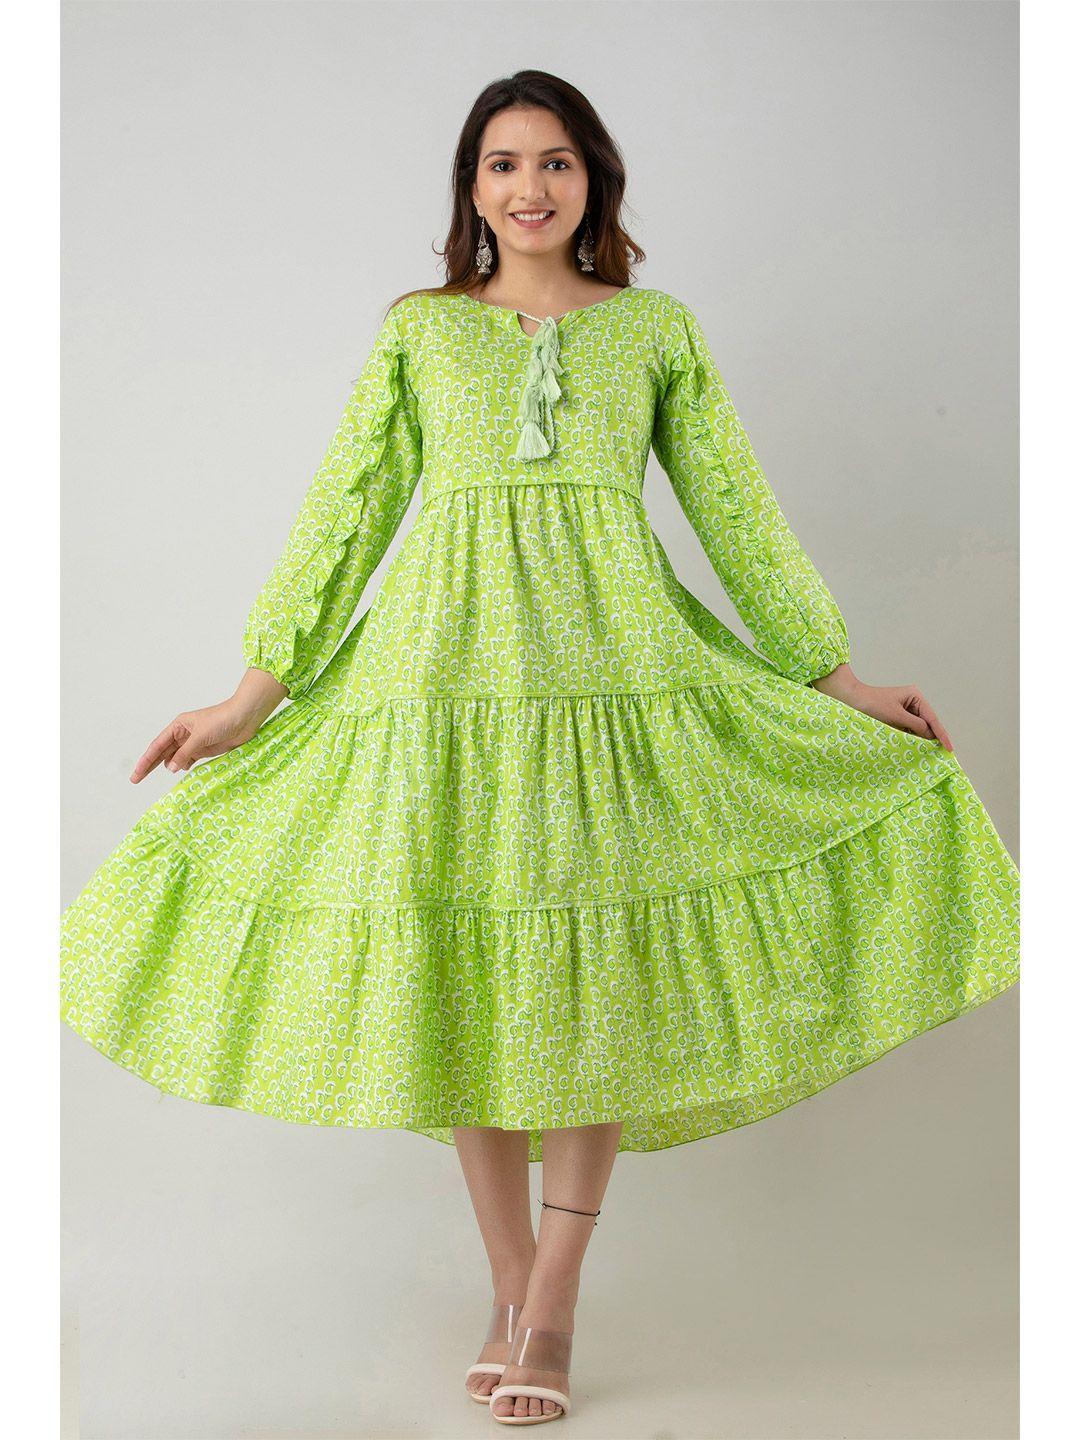 kalini green floral ethnic cotton dress